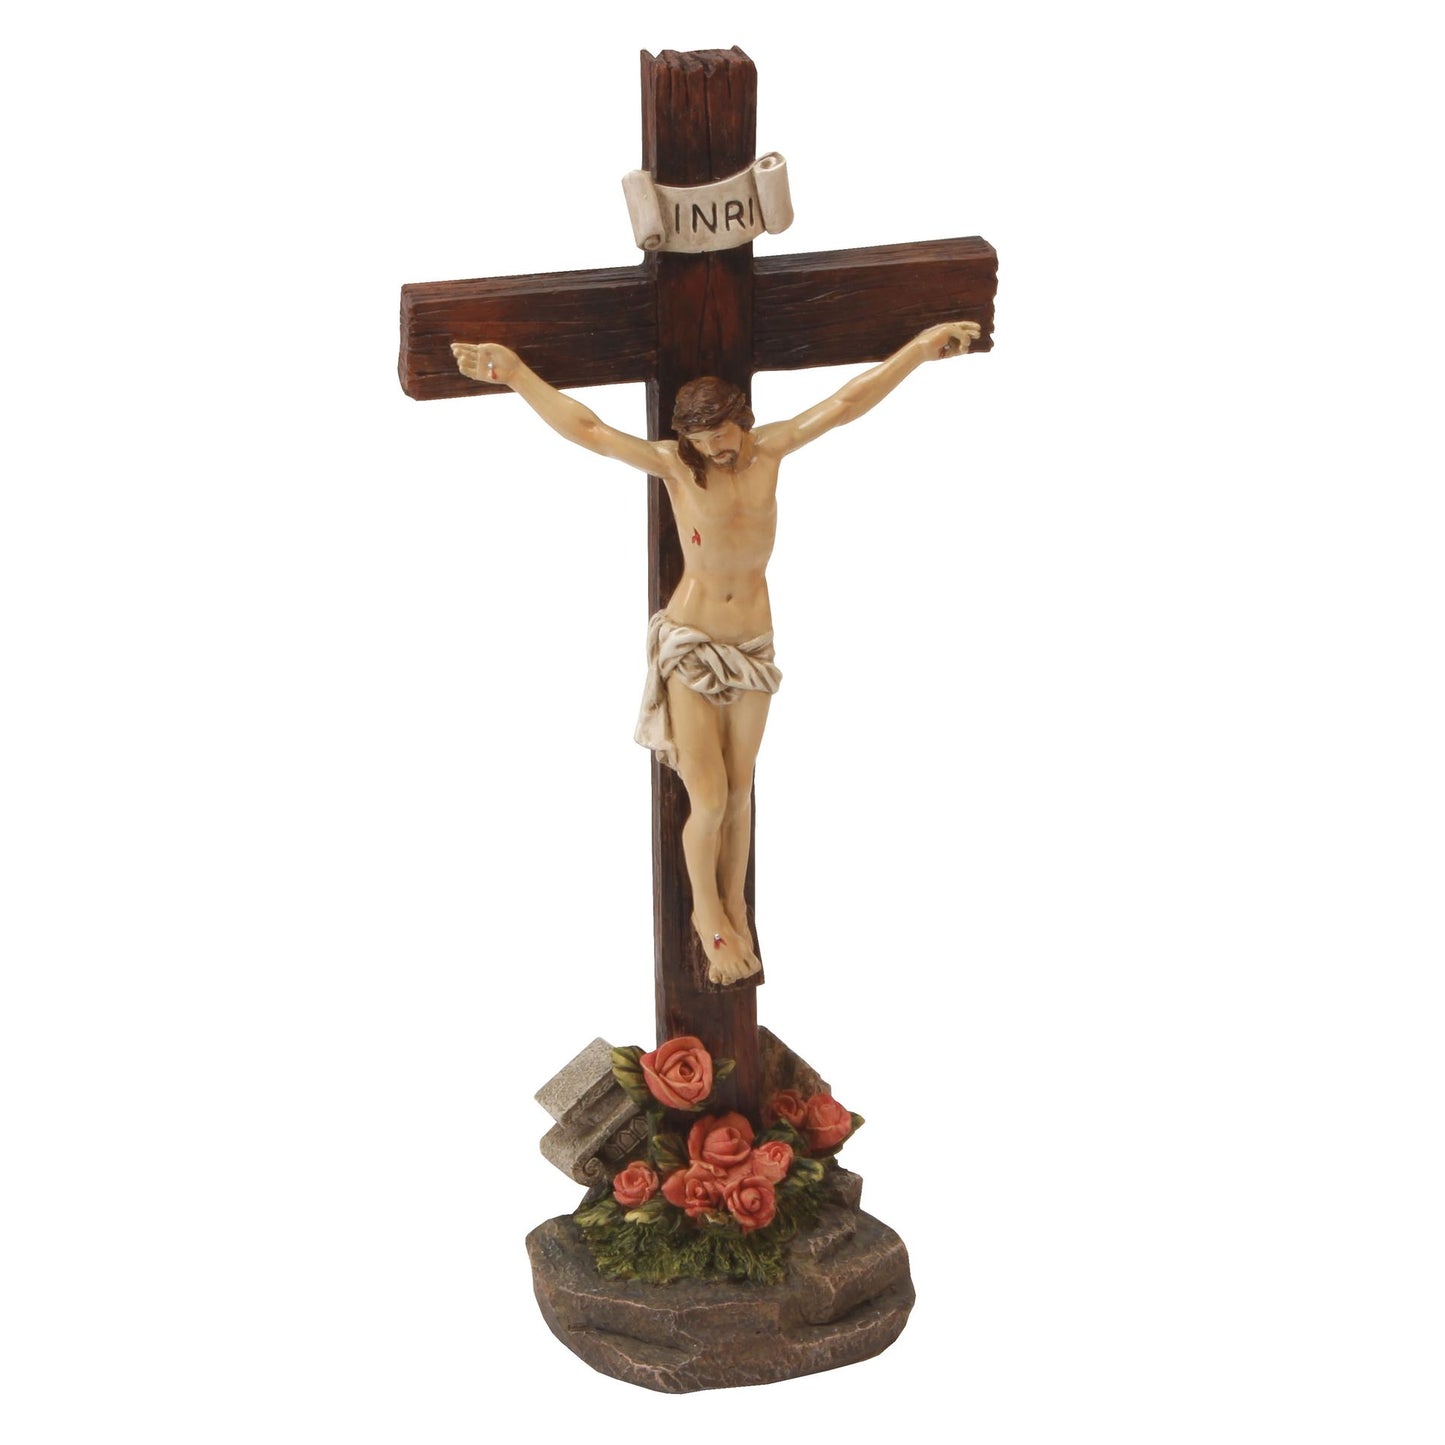 Jesus On Cross Figurine - Jesus Figurine - Religious Ornament - 26 x 11.5 x 7.5 cm